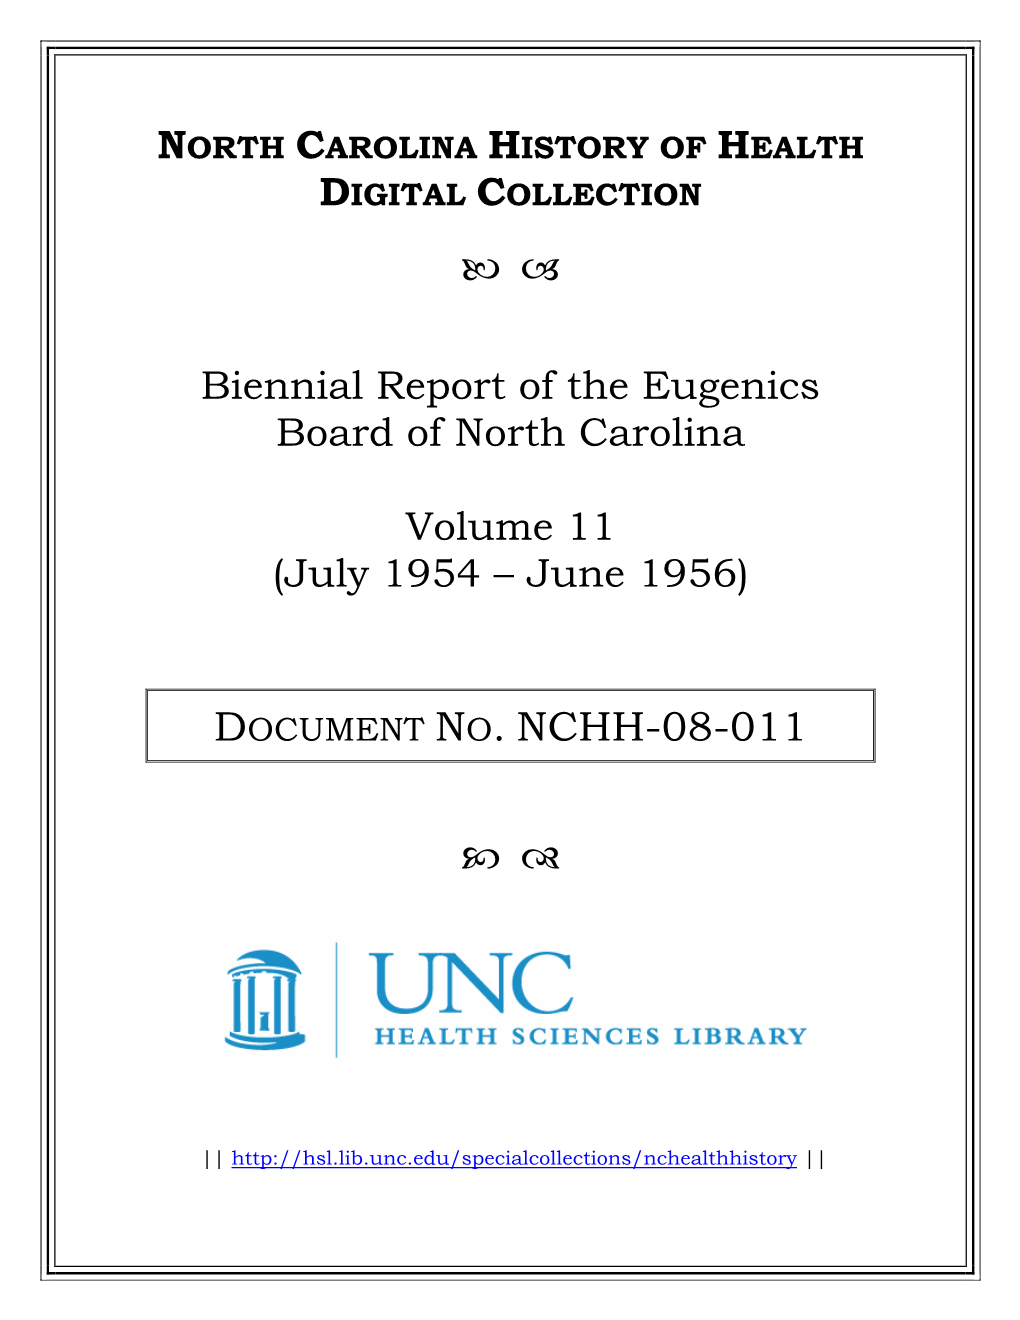 Biennial Report of the Eugenics Board of North Carolina